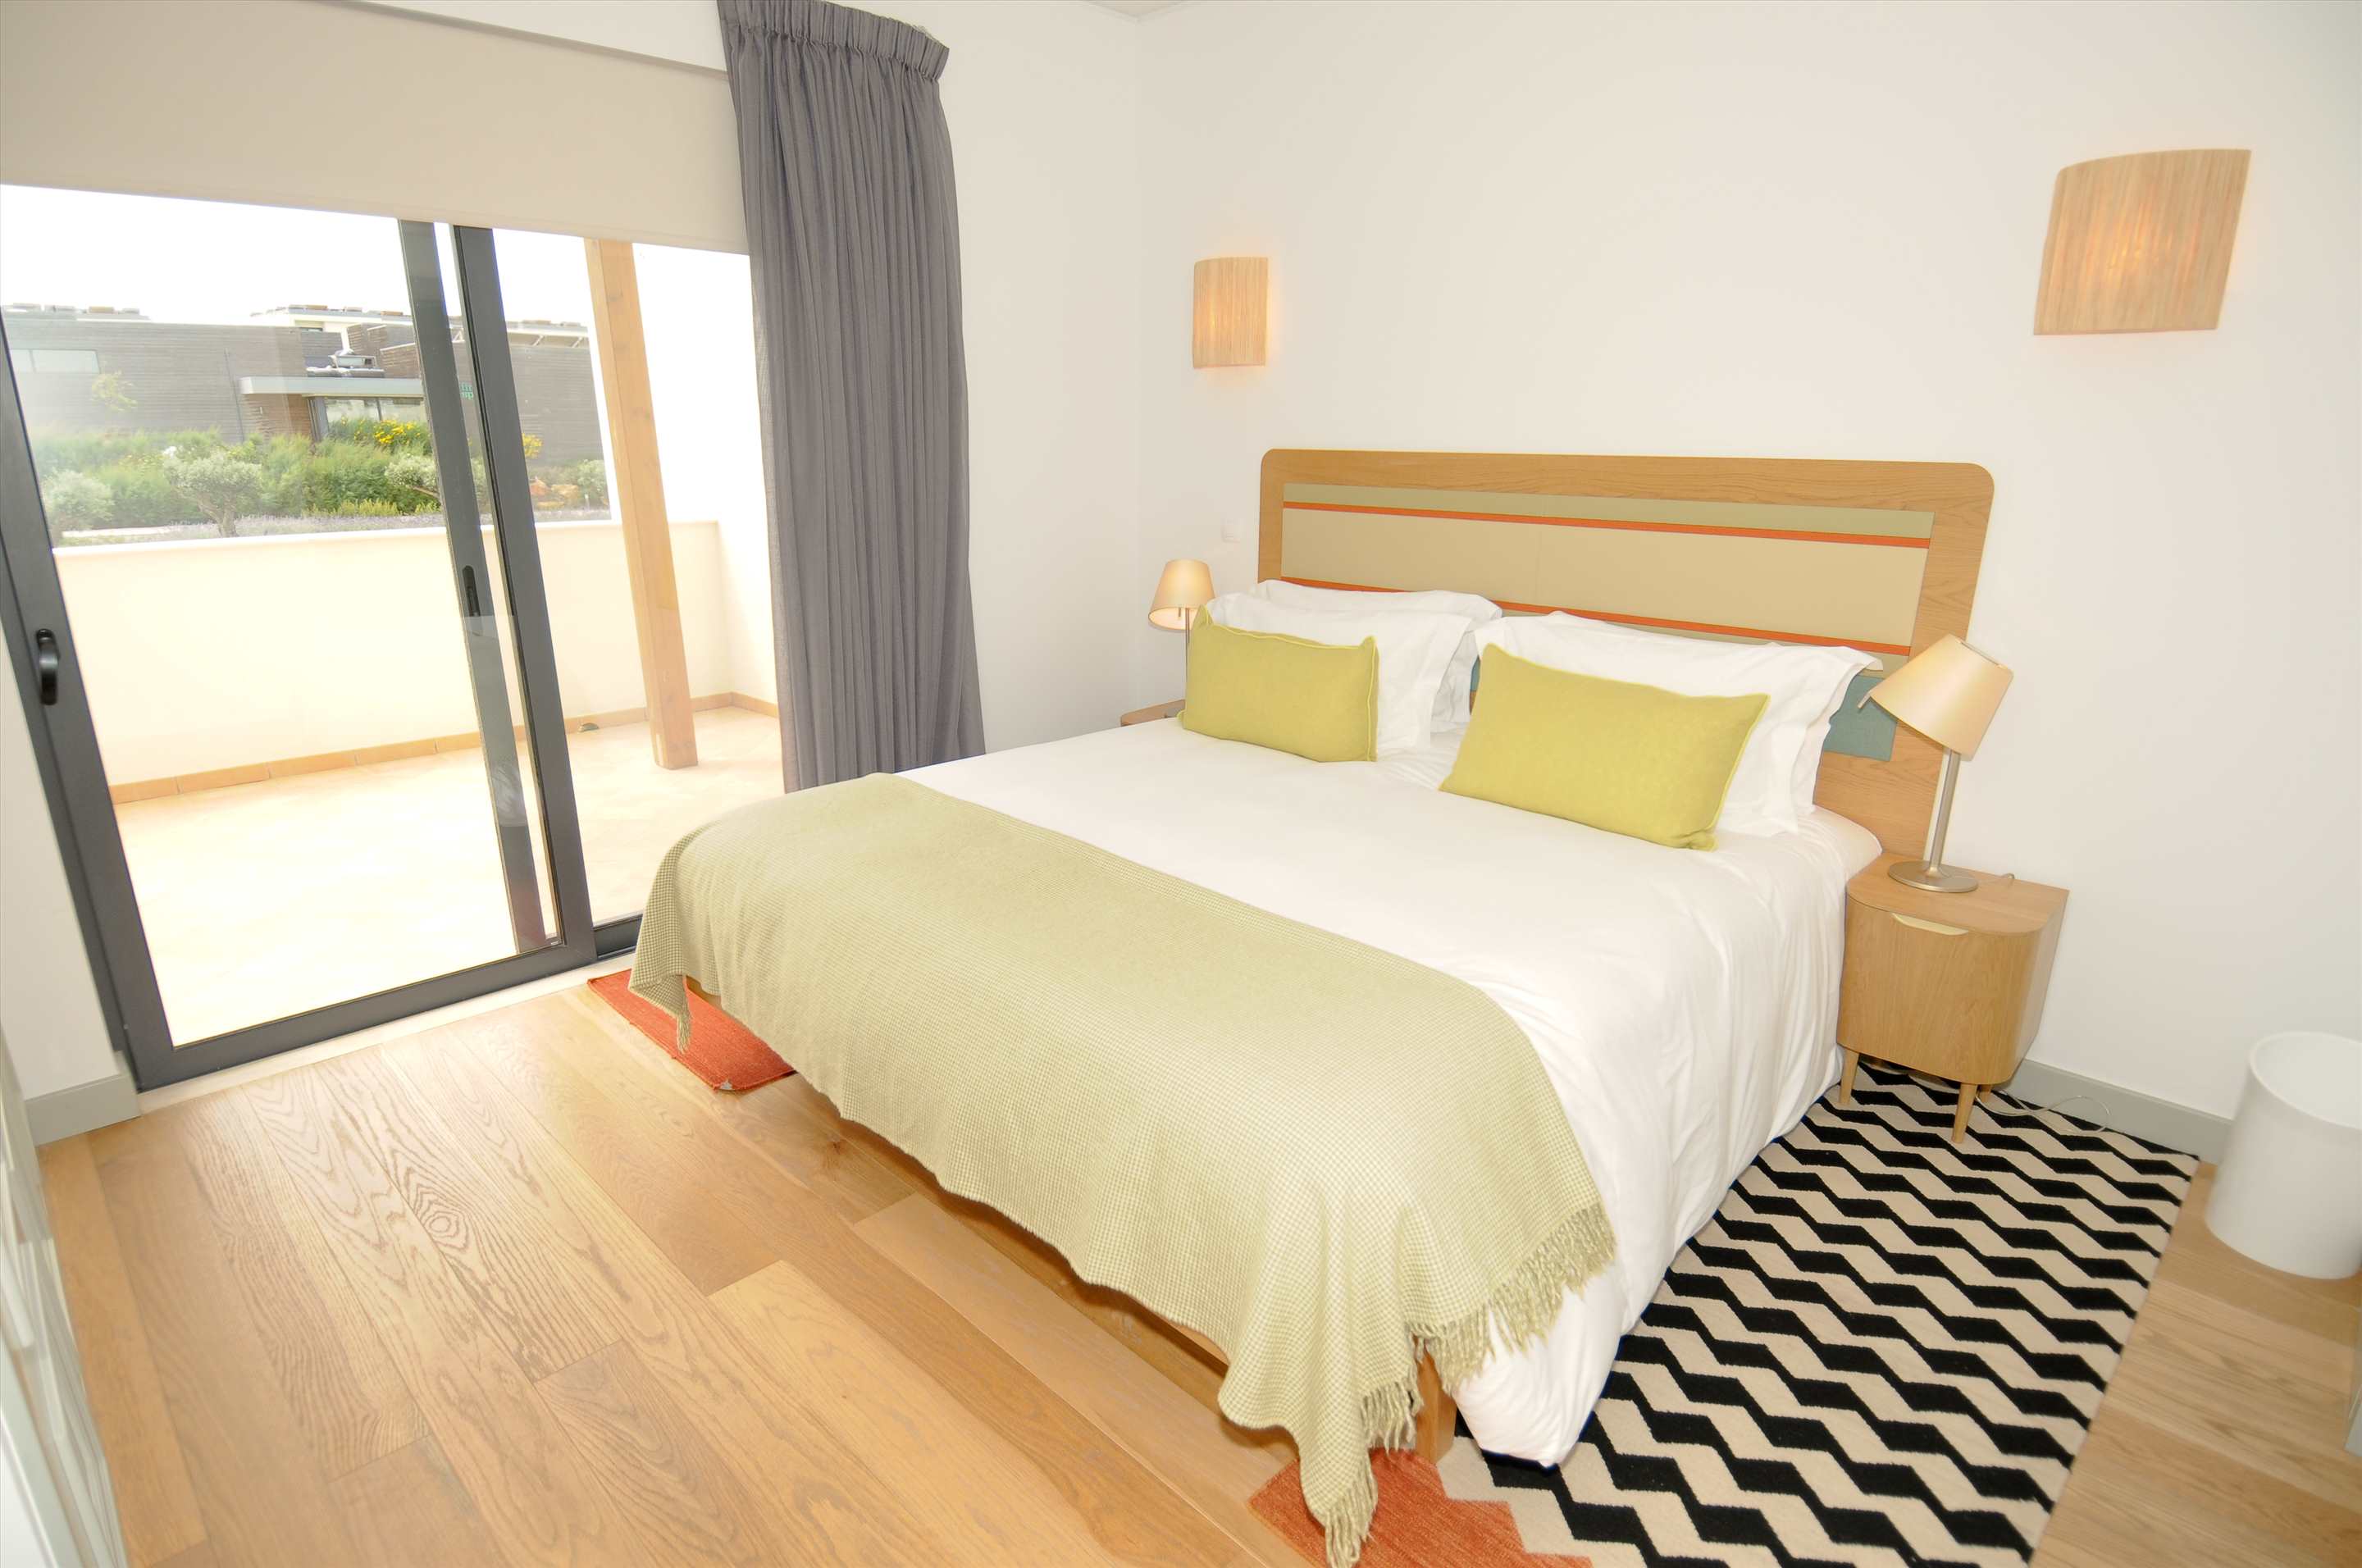 Martinhal Village Garden House, One Bedroom Apartment, 1 bedroom villa in Martinhal Sagres, Algarve Photo #6